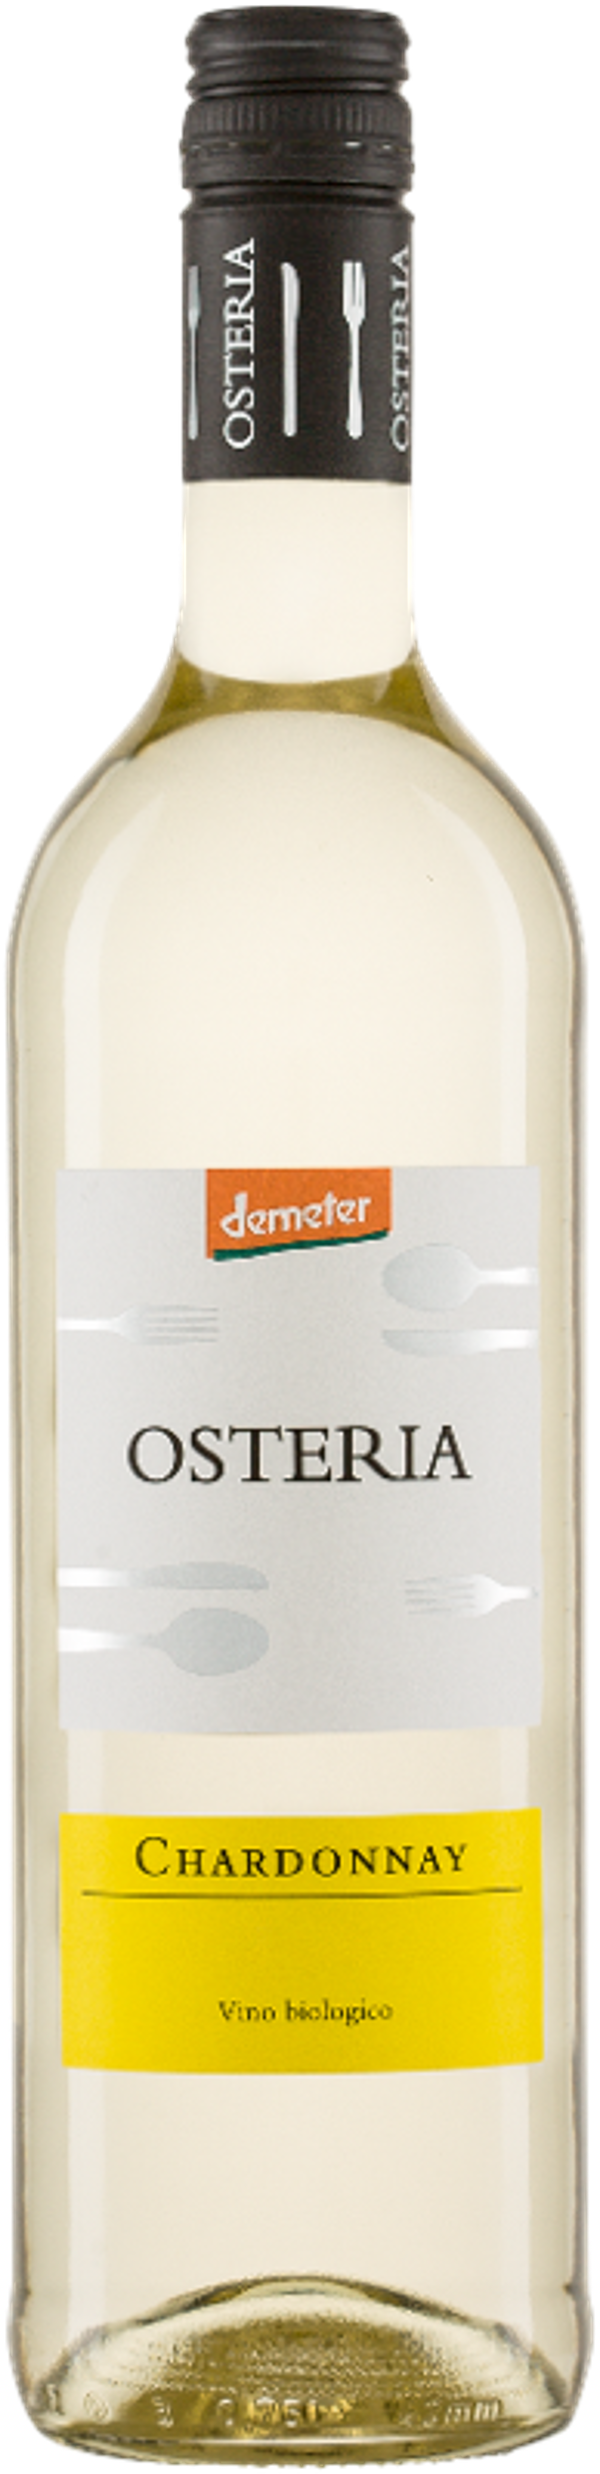 Produktfoto zu Osteria Chardonnay IGT 0,75Ltr